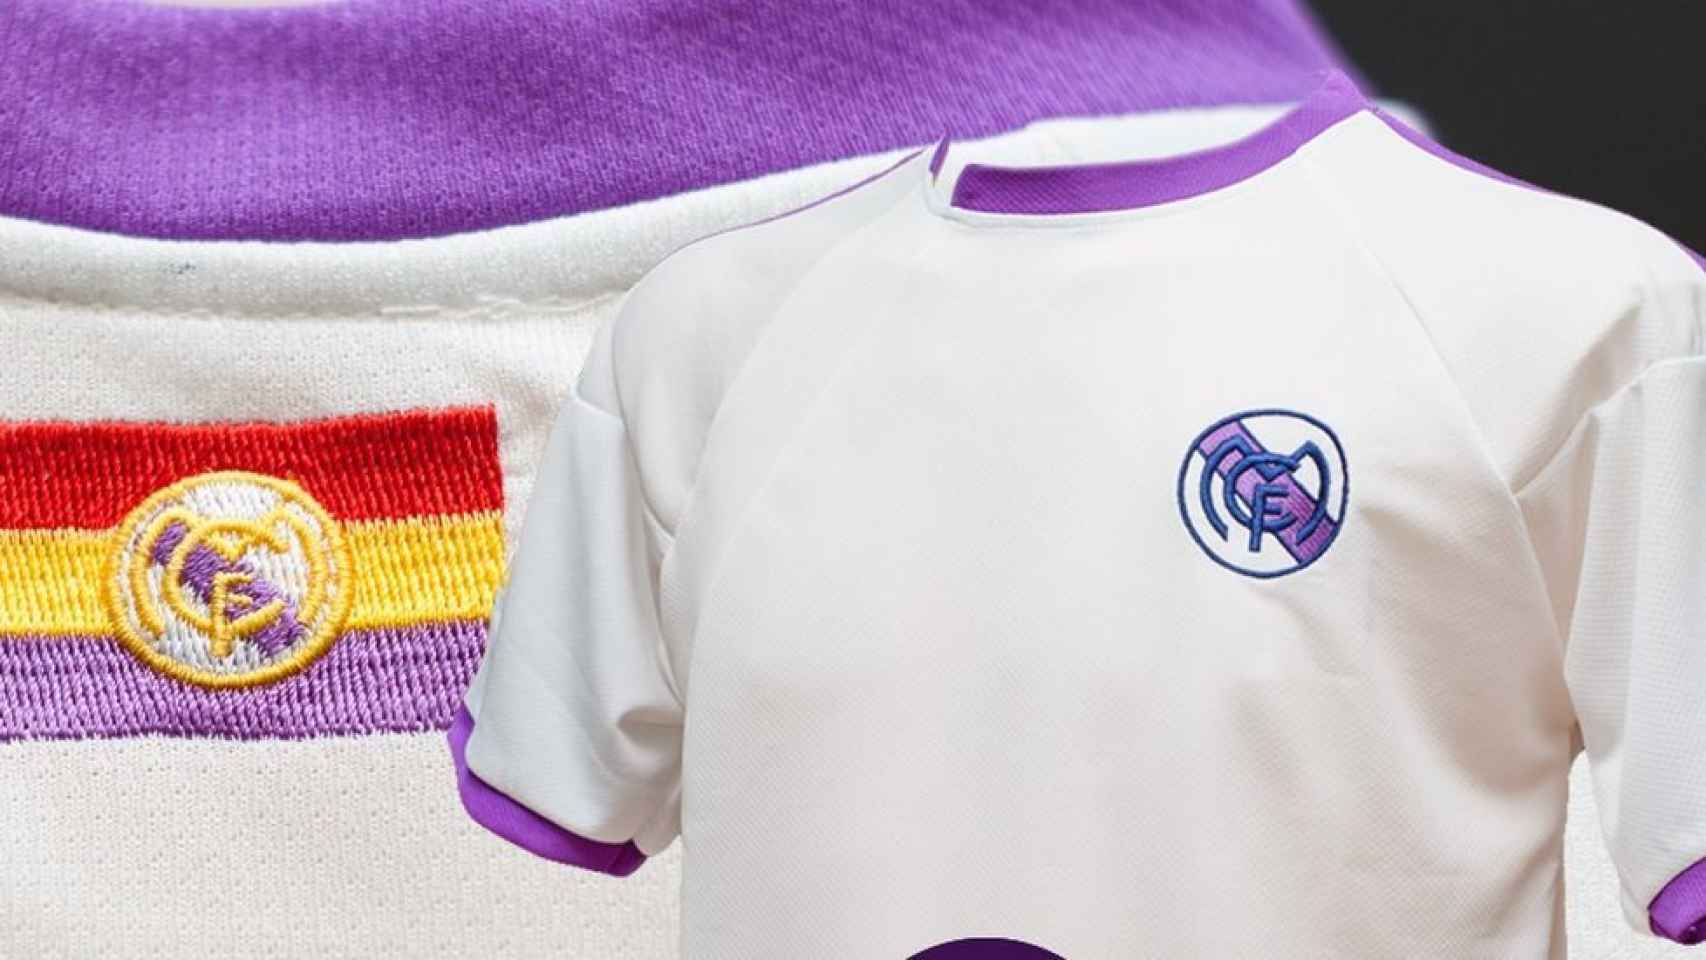 La camiseta del inexistente Real Madrid republicano.